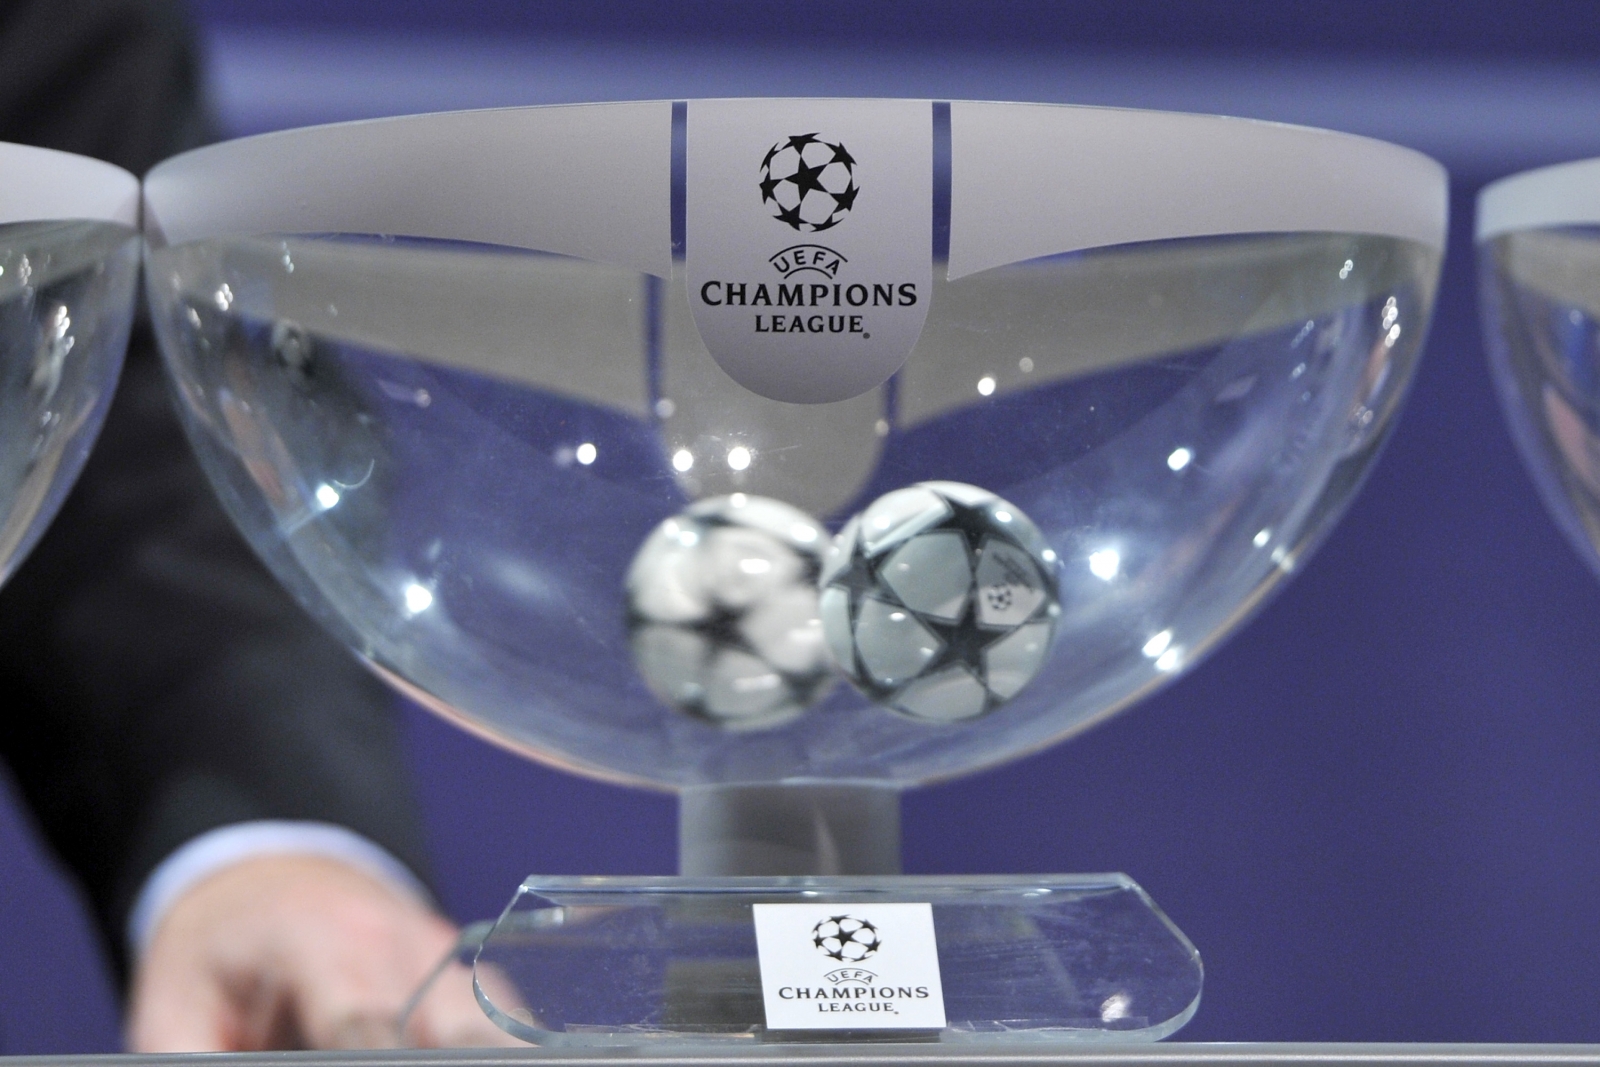 europa conference league pots